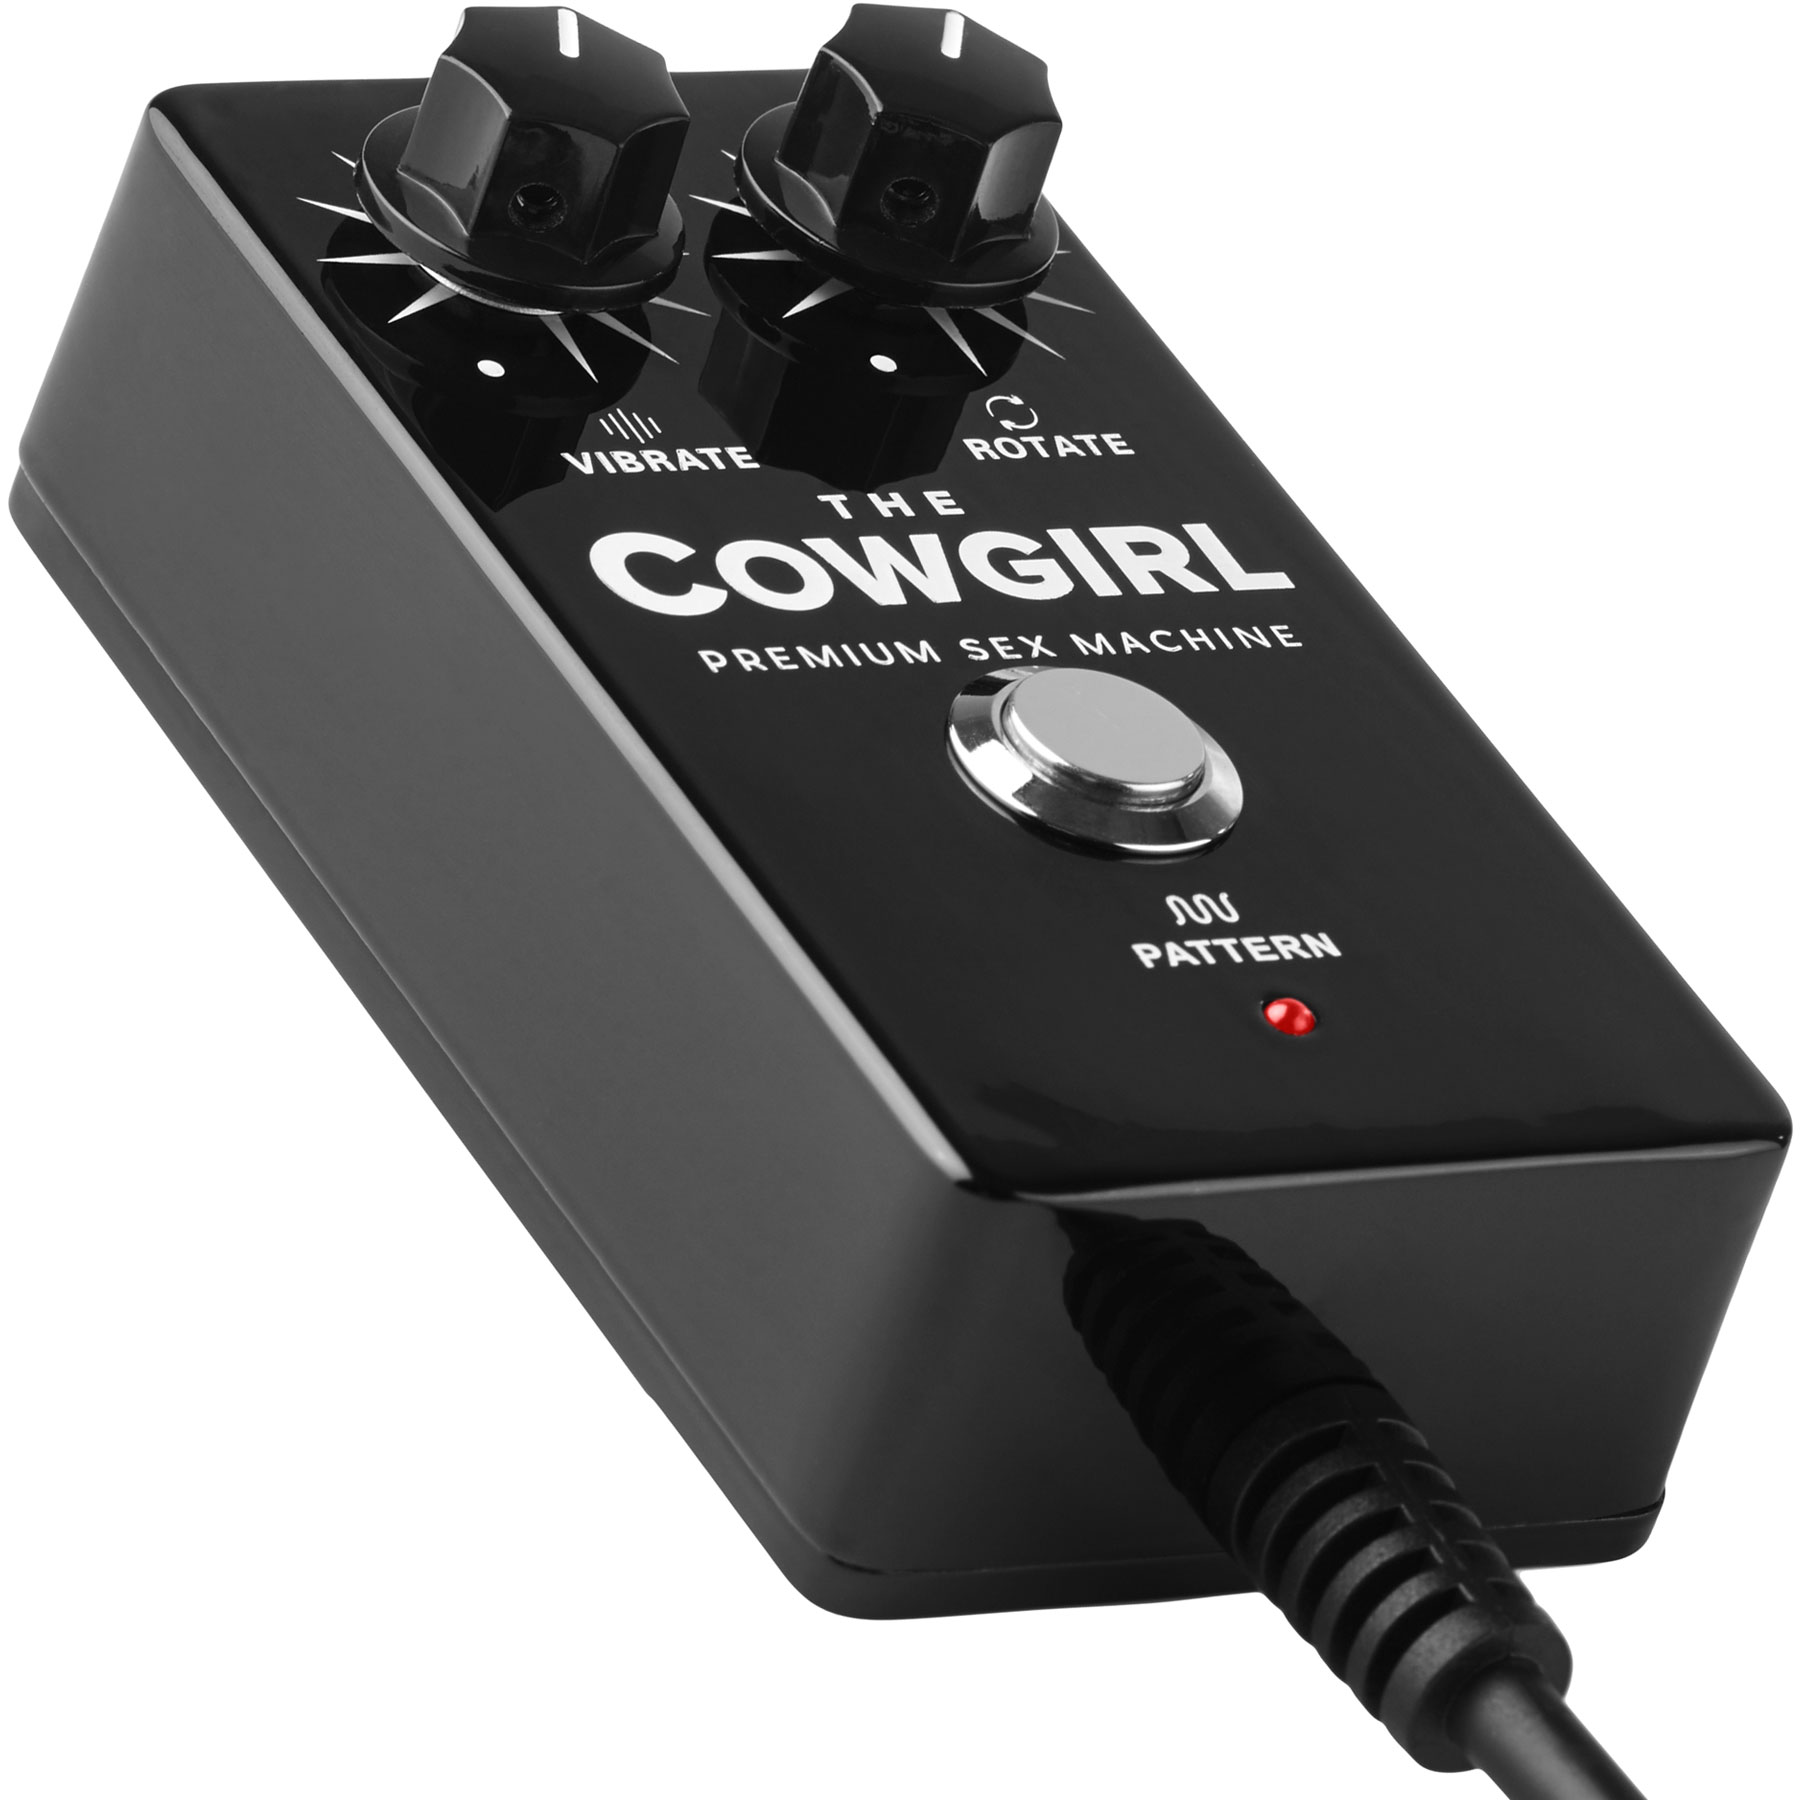 The Cowgirl - Remote